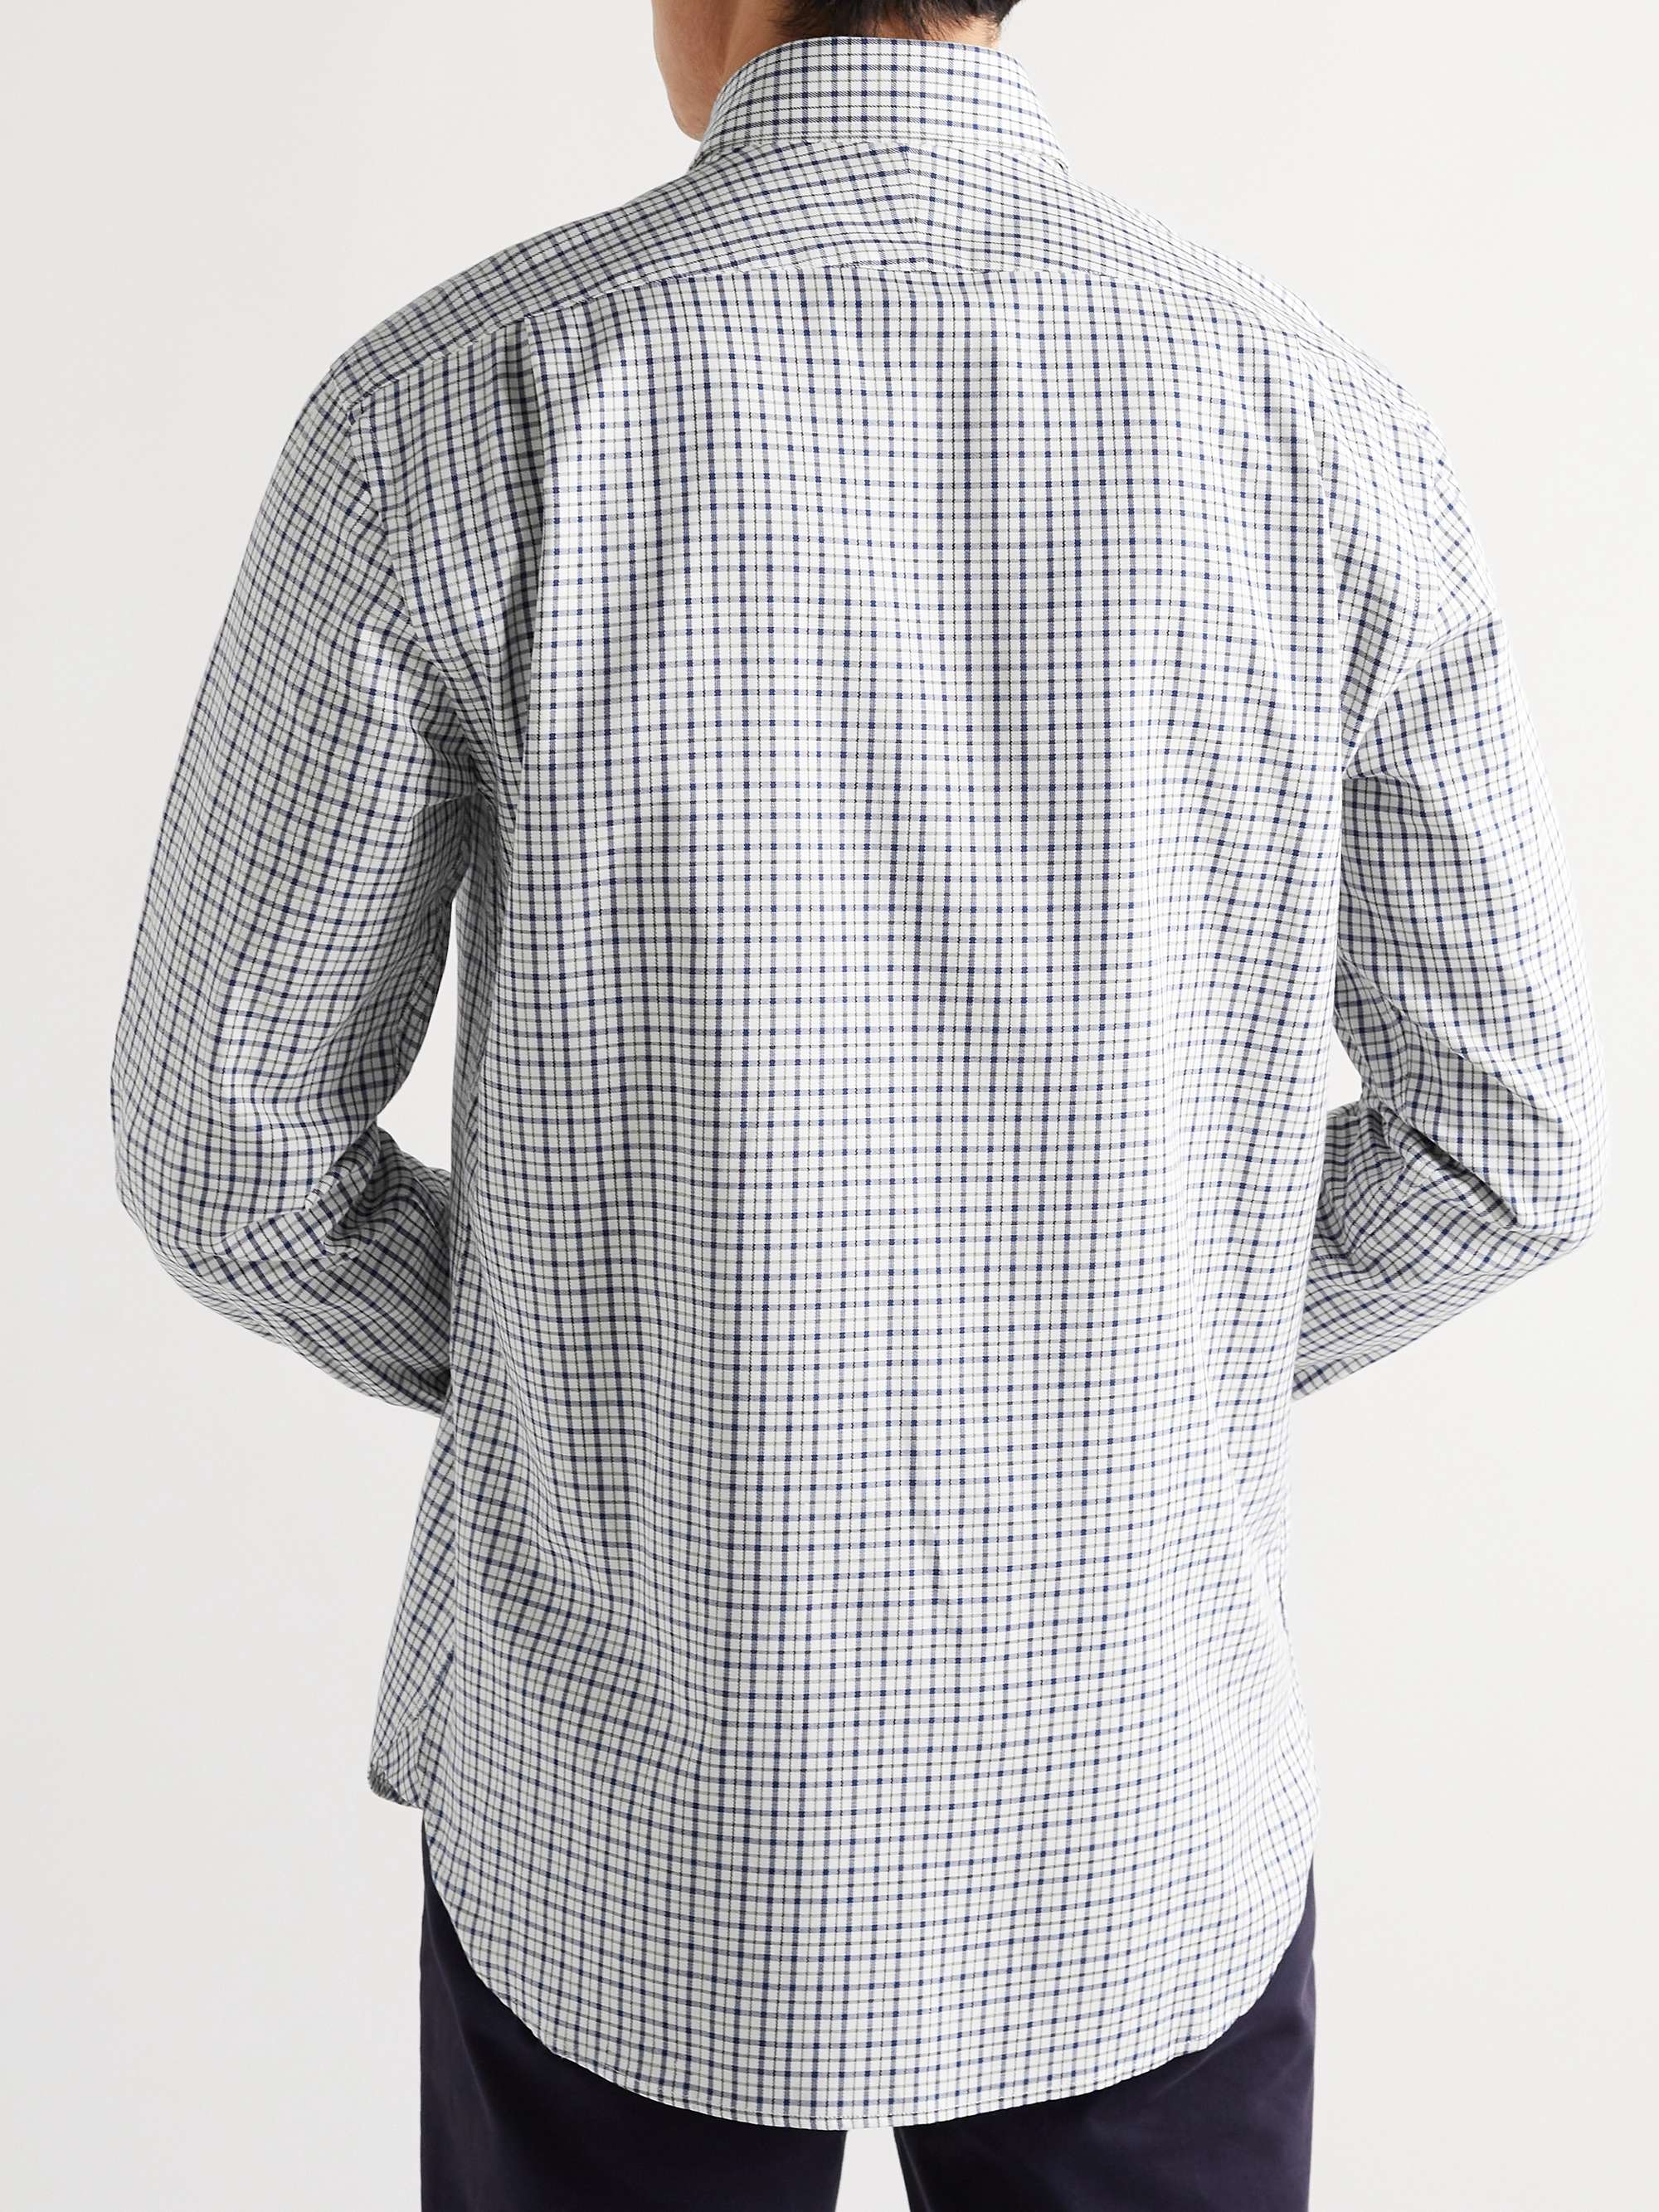 PURDEY Button-Down Collar Checked Cotton Shirt